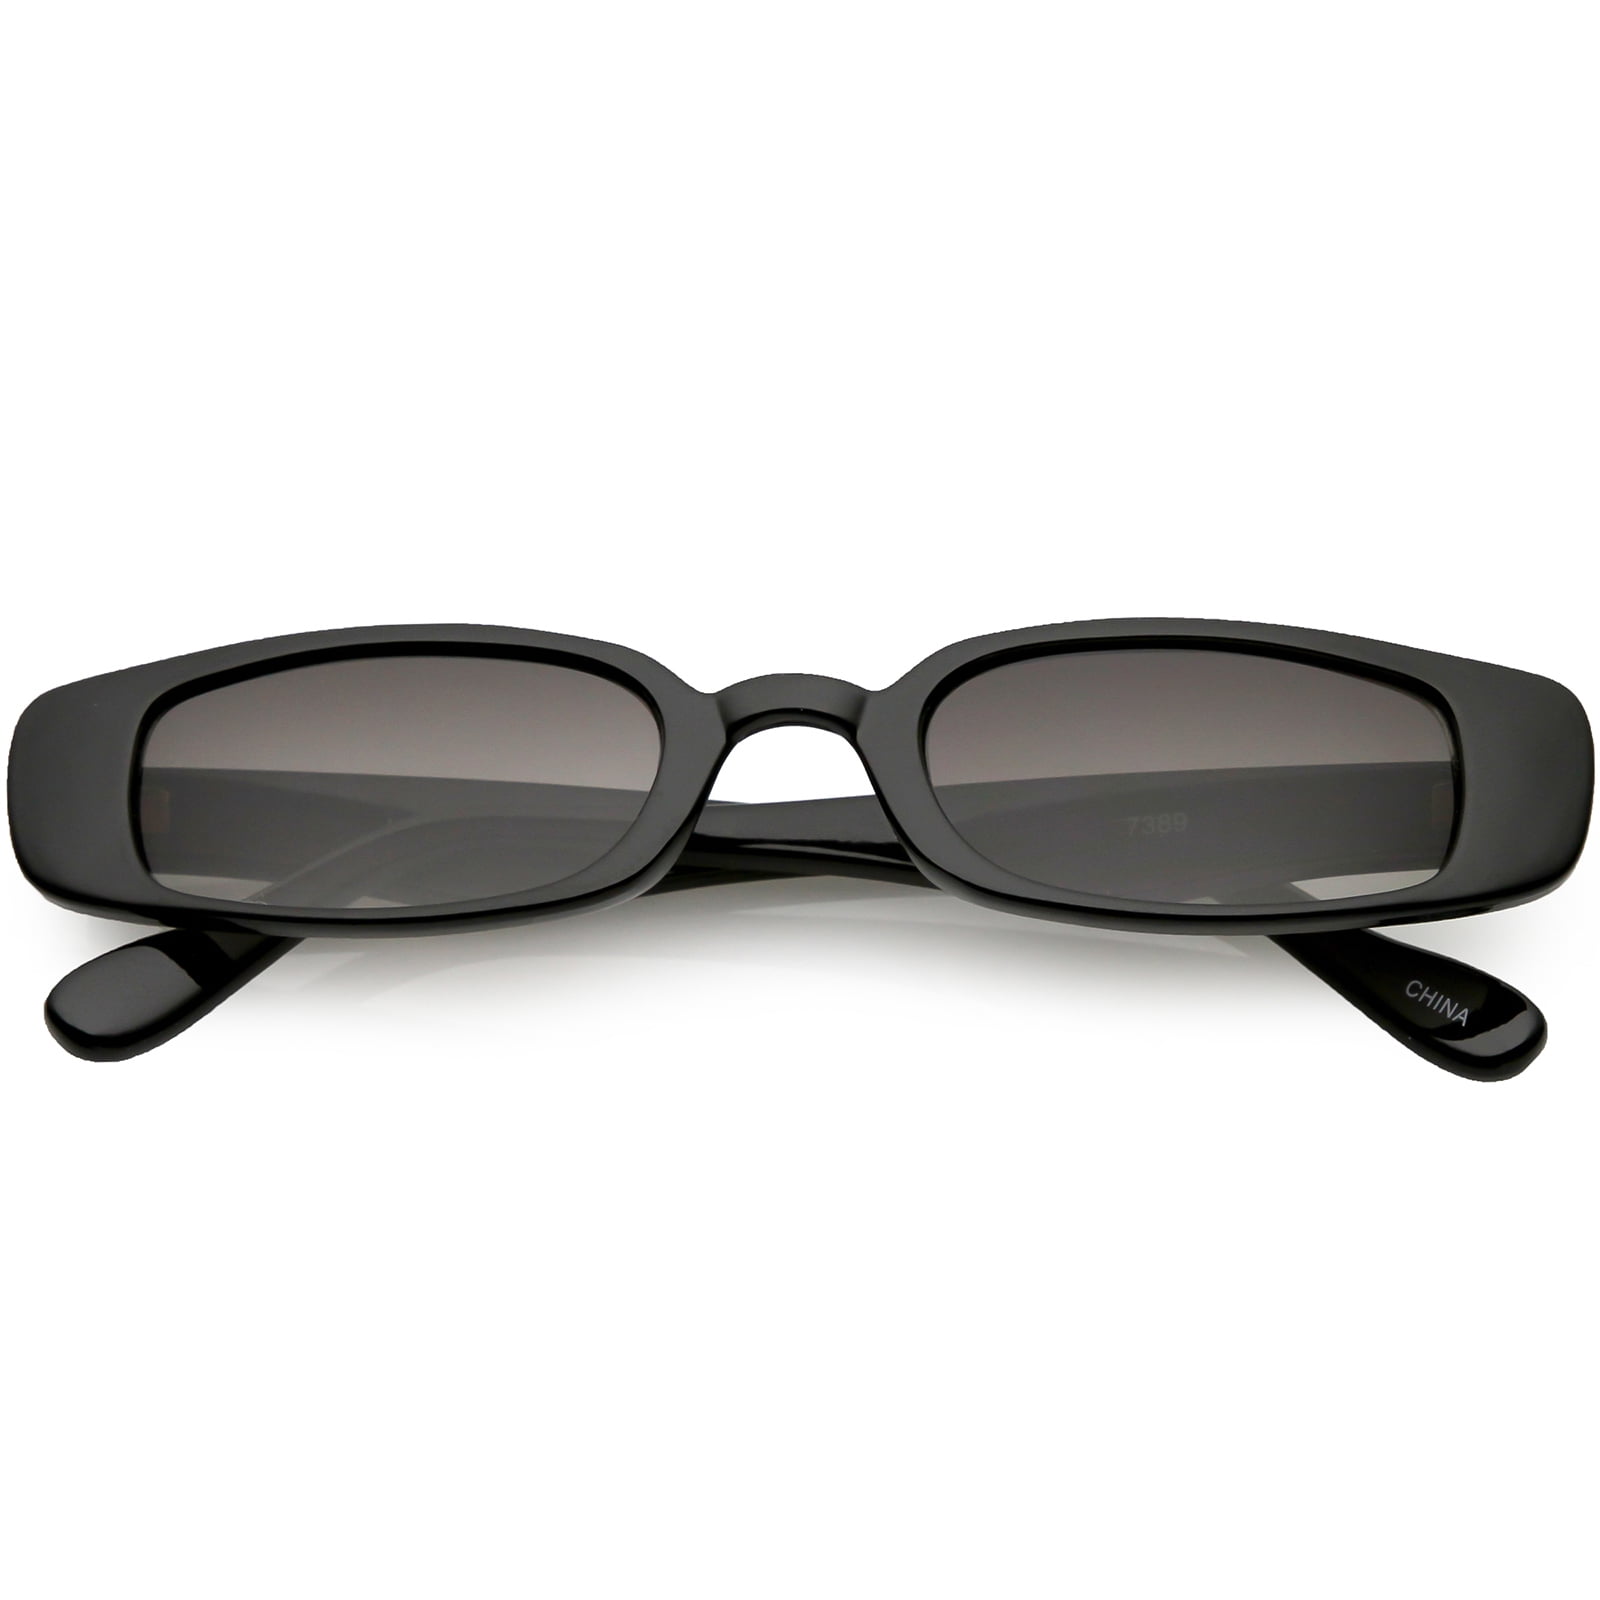 Black Small Rectangular Sunglasses Classic Narrow Color Lens 